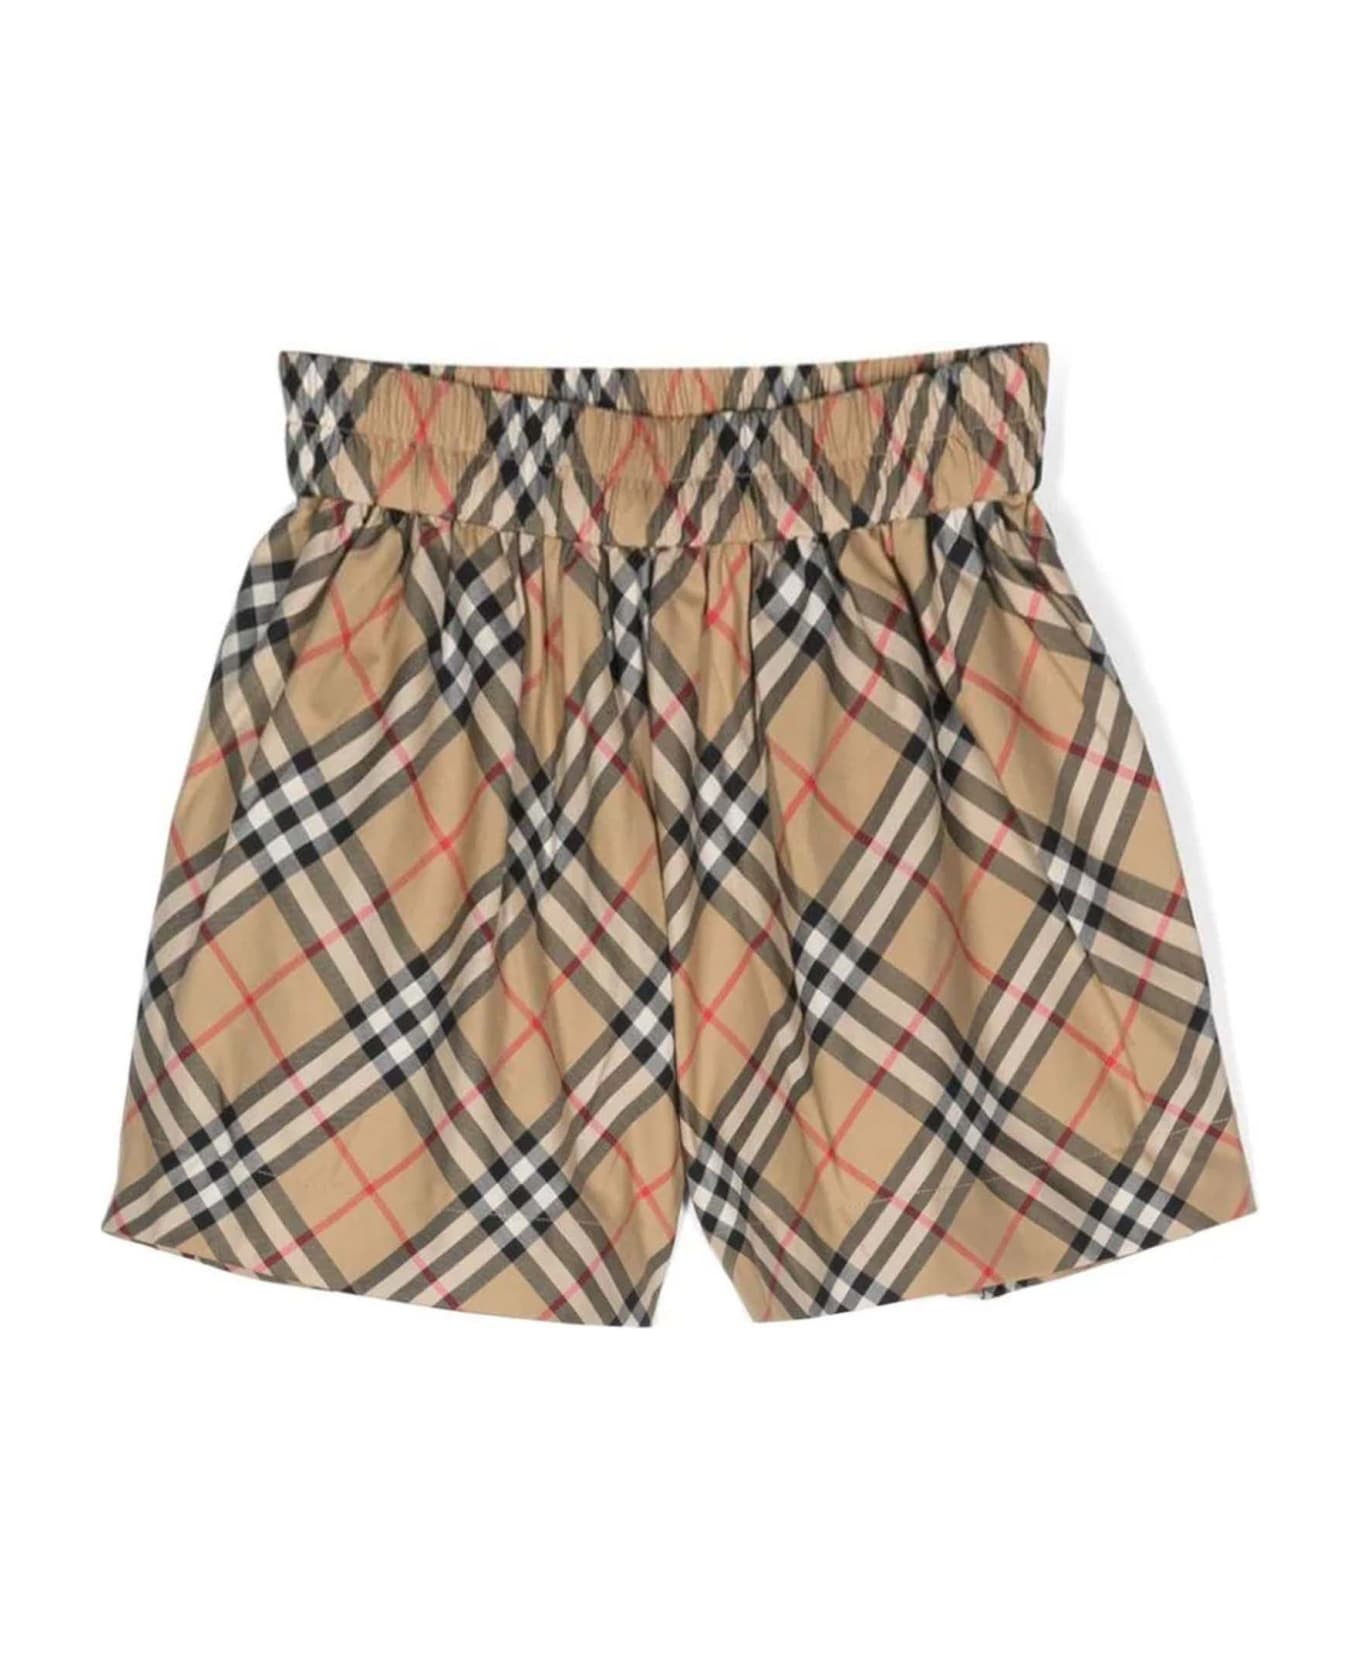 Burberry Vintage Check-pattern Cotton Shorts - Archive beige ip chk